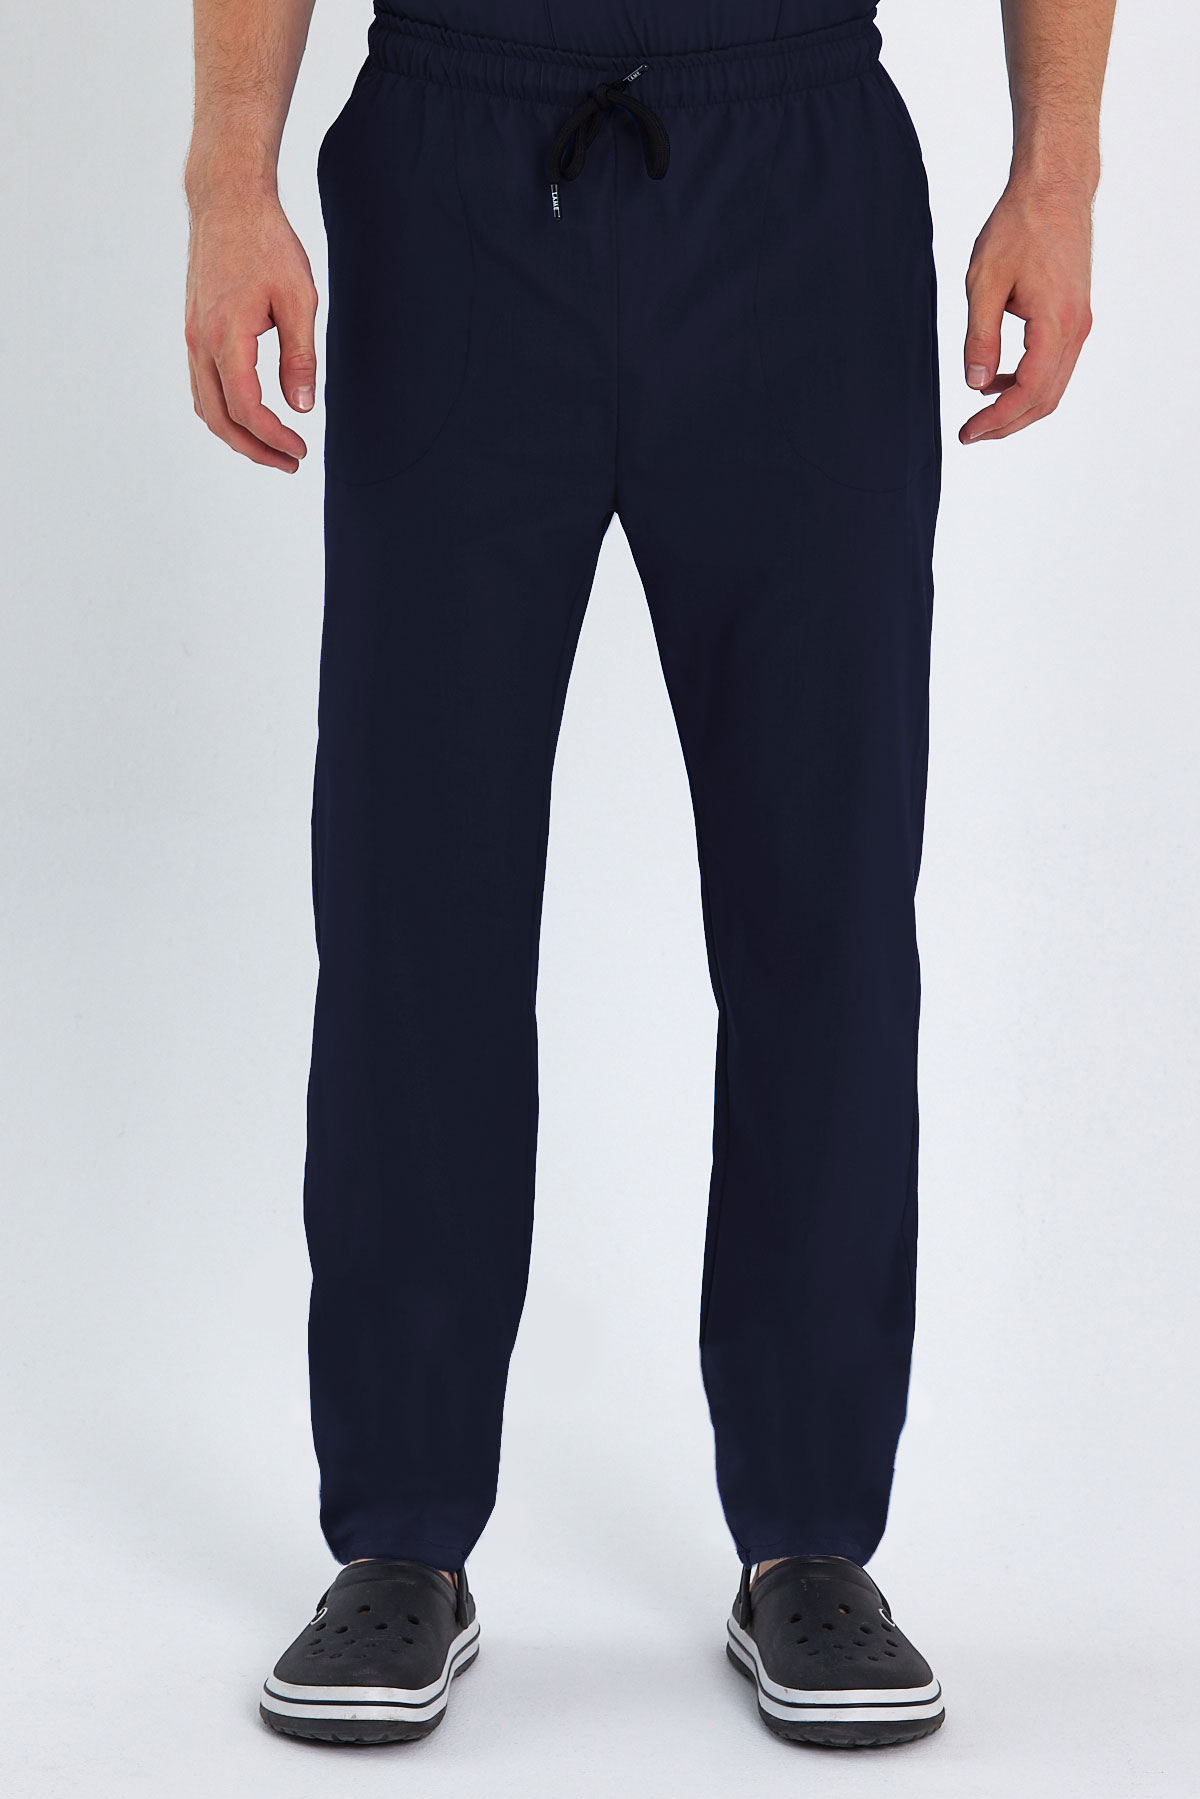 1009 Basic Lacivert Pantolon